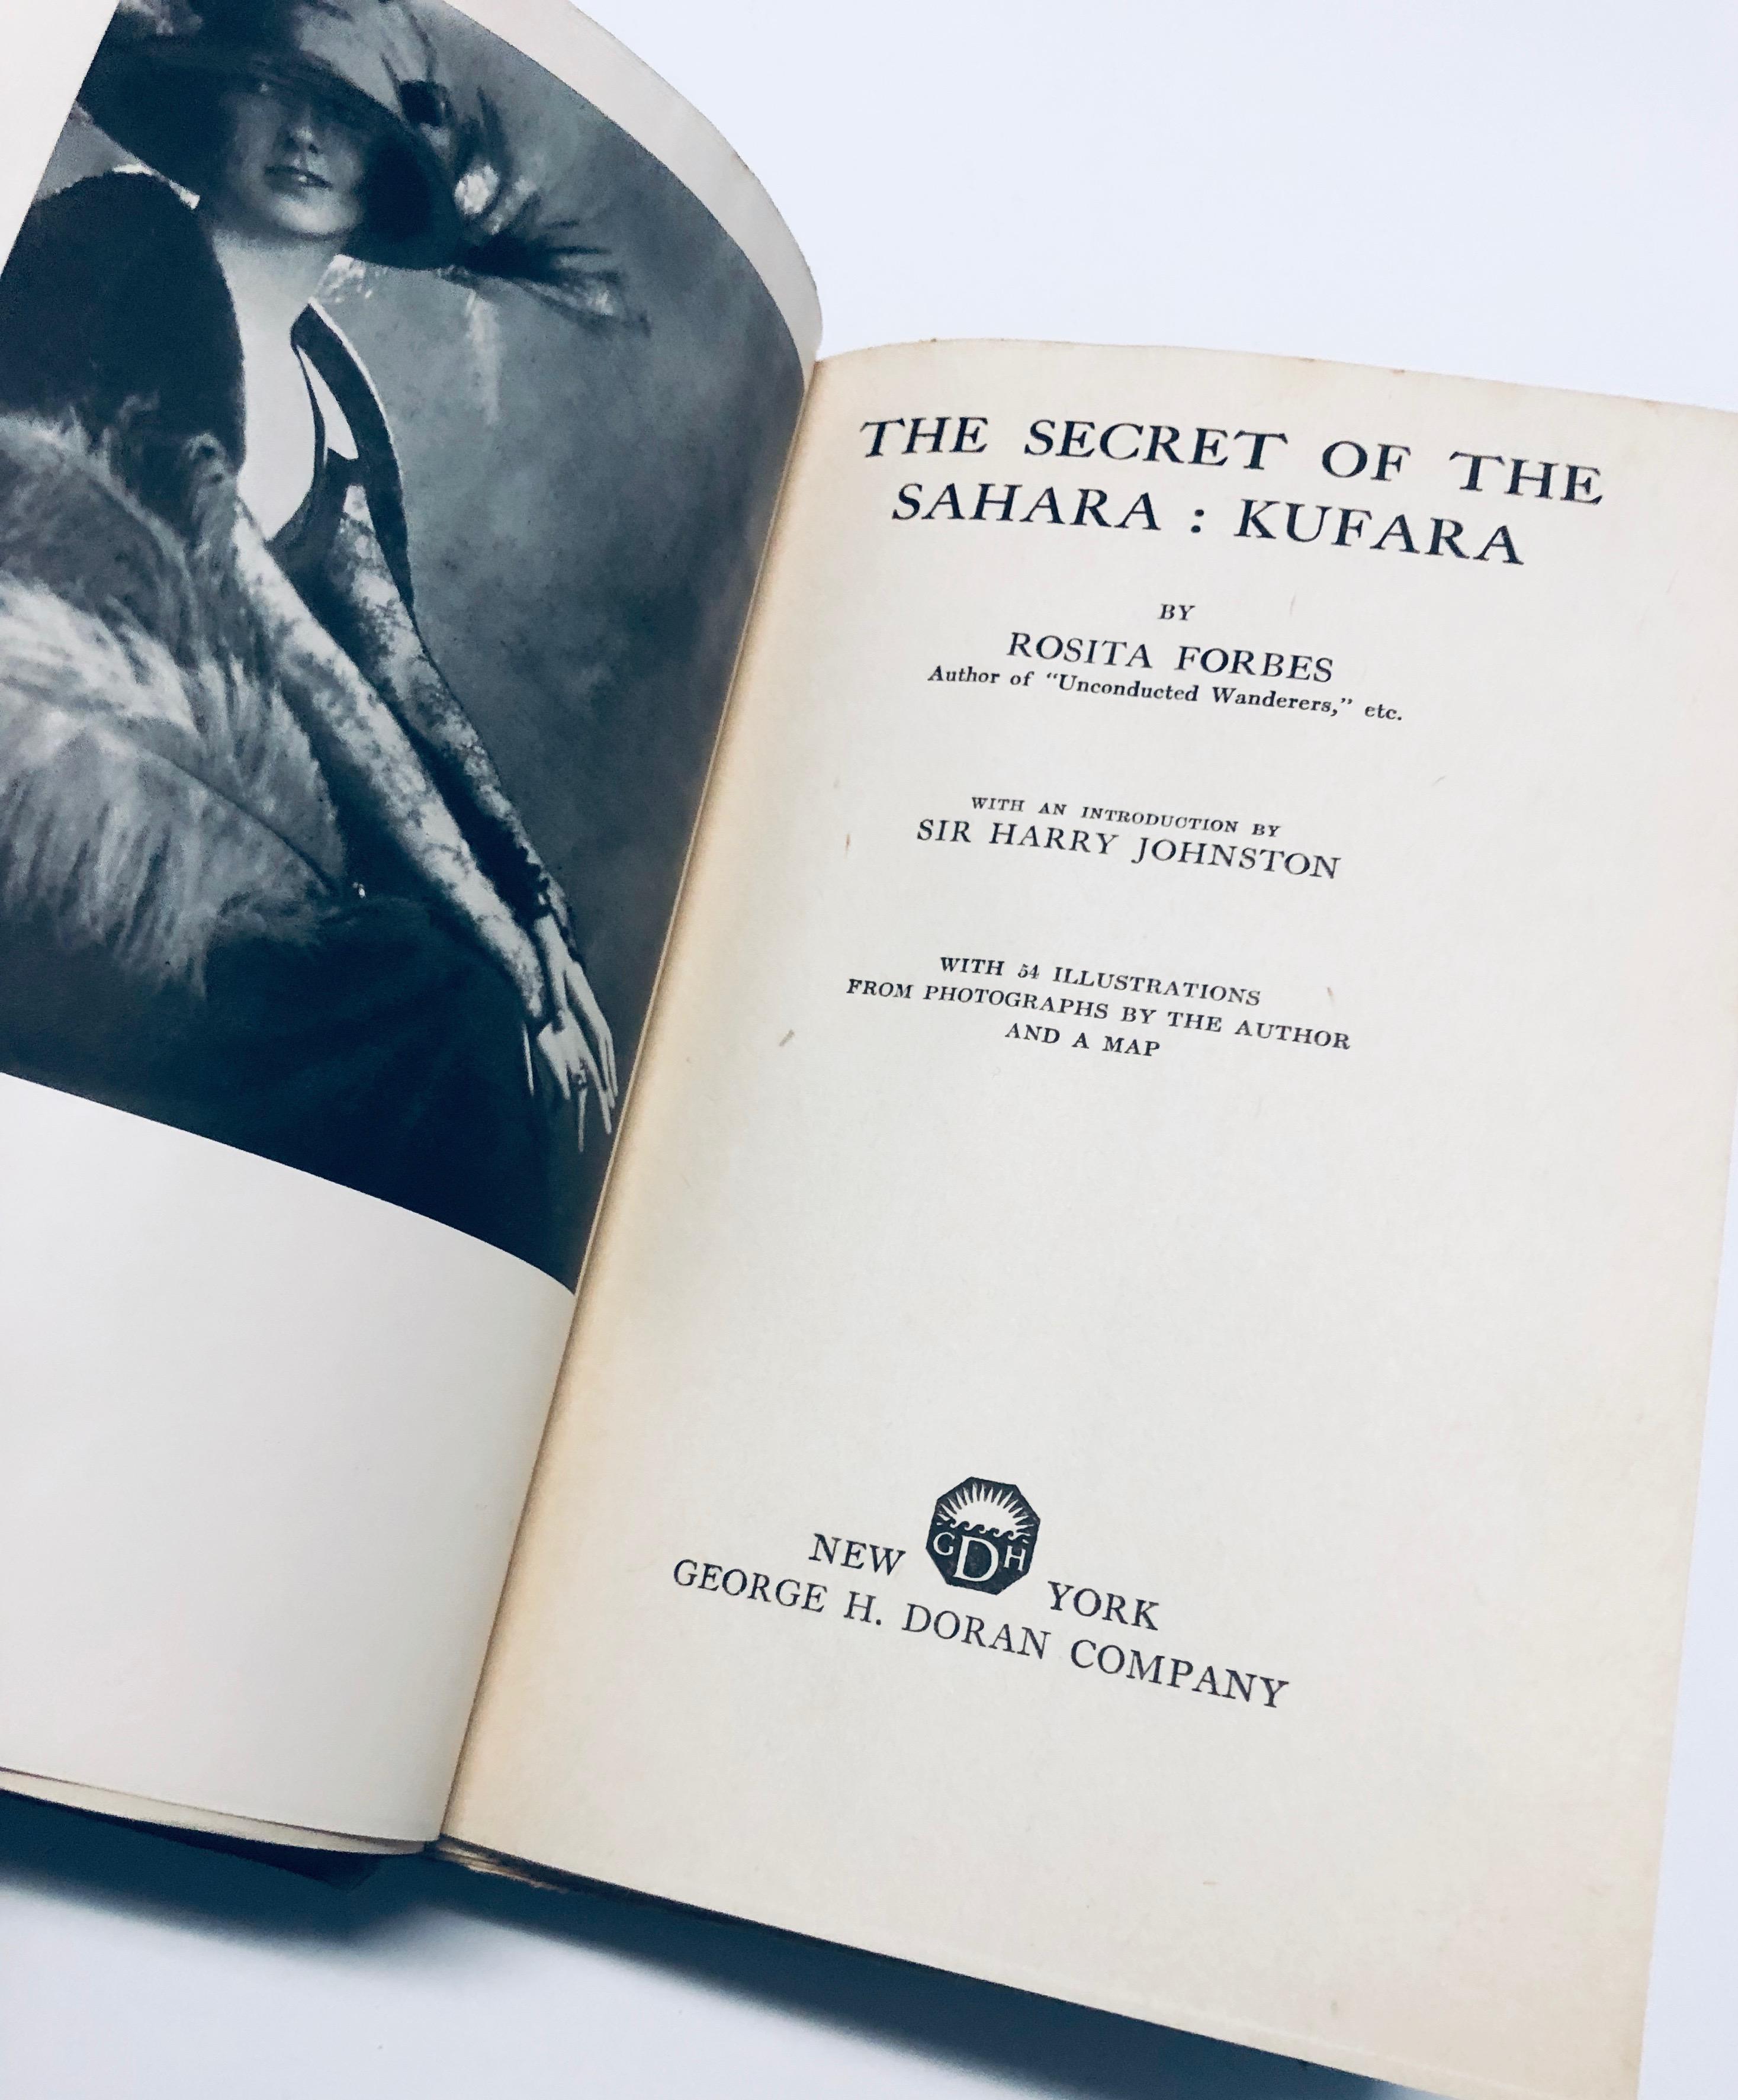 The Secret of the Sahara: Kufara by Rosita Forbes (1921)